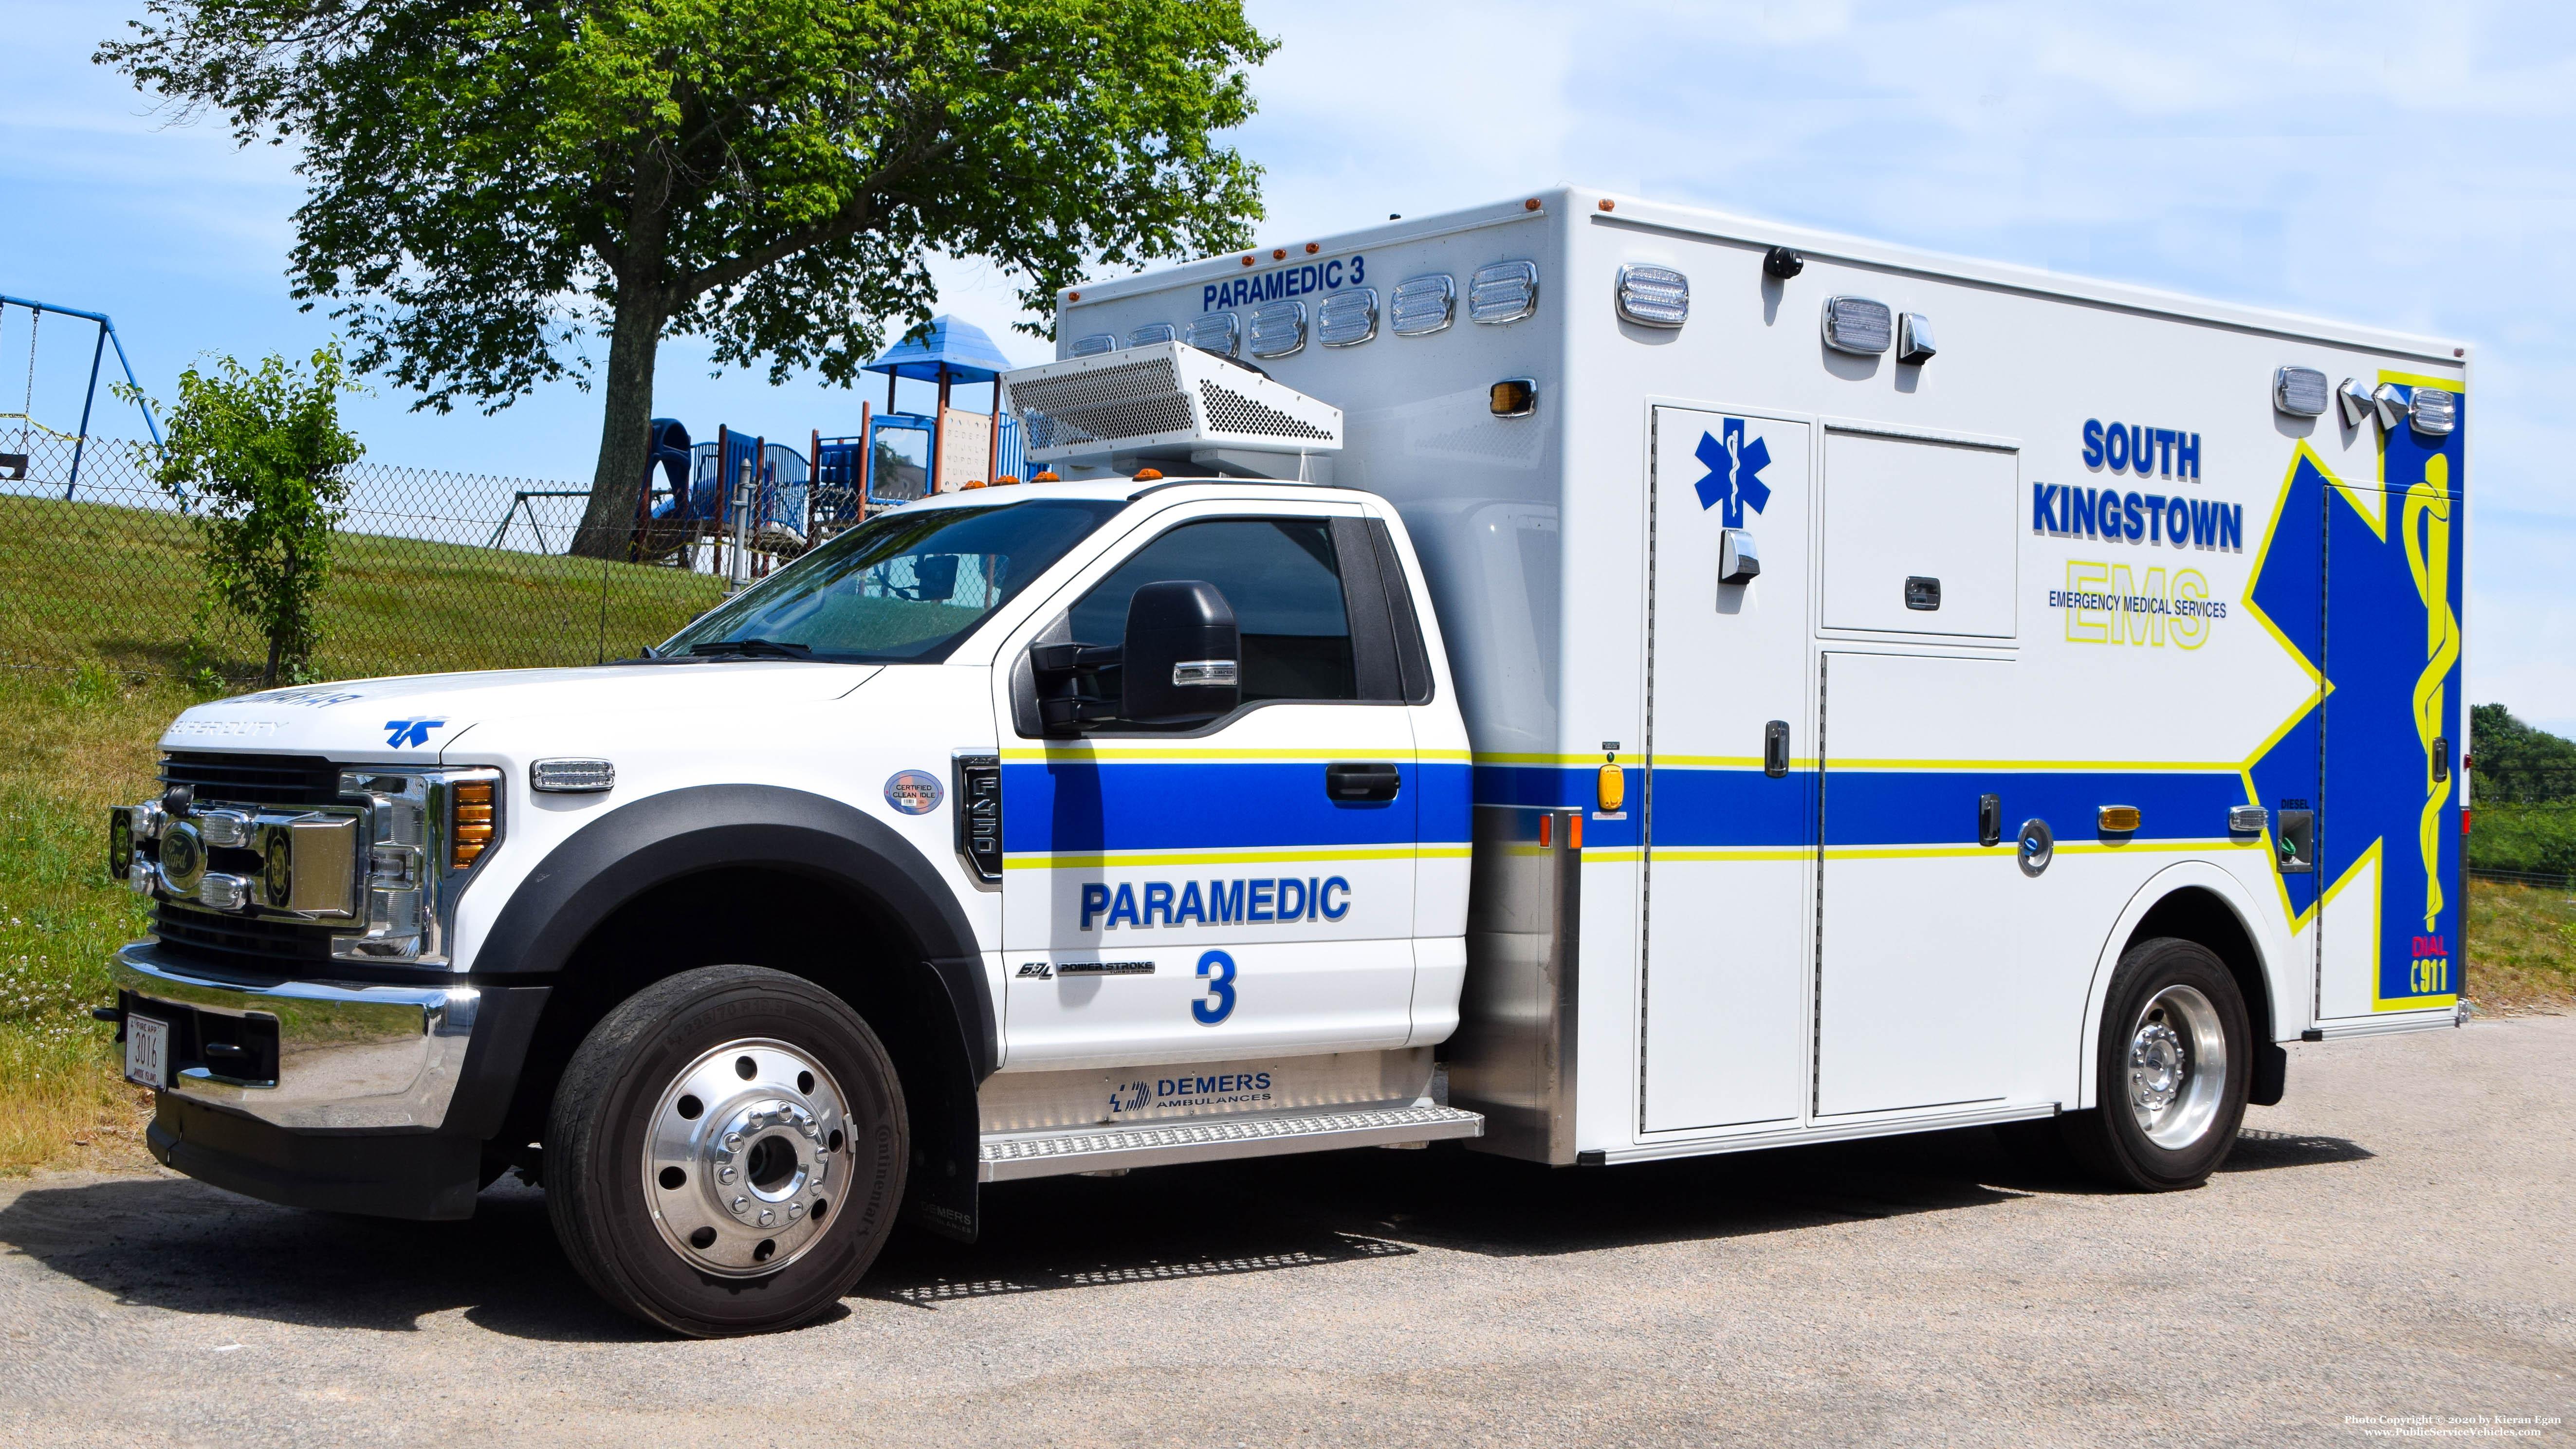 A photo  of South Kingstown EMS
            Paramedic 3, a 2020 Ford F-450 XLT/Demers             taken by Kieran Egan